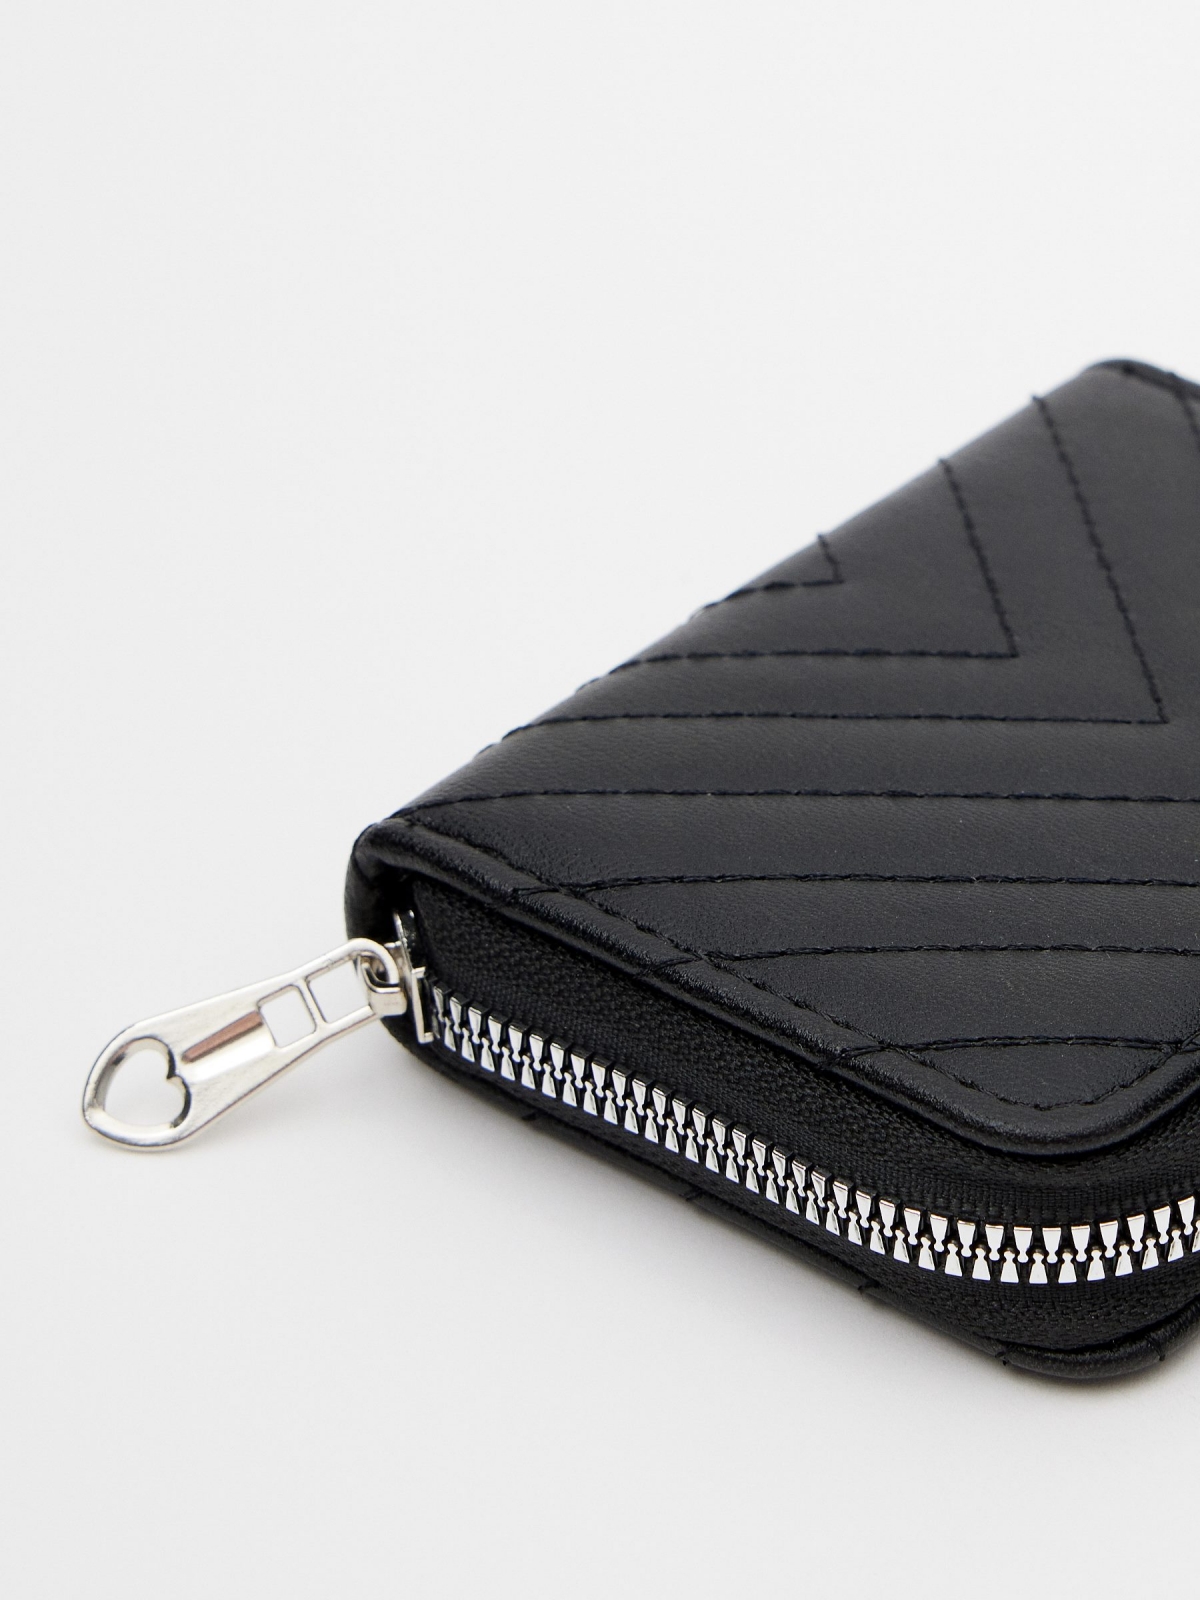 Women's leatherette wallet black detail view